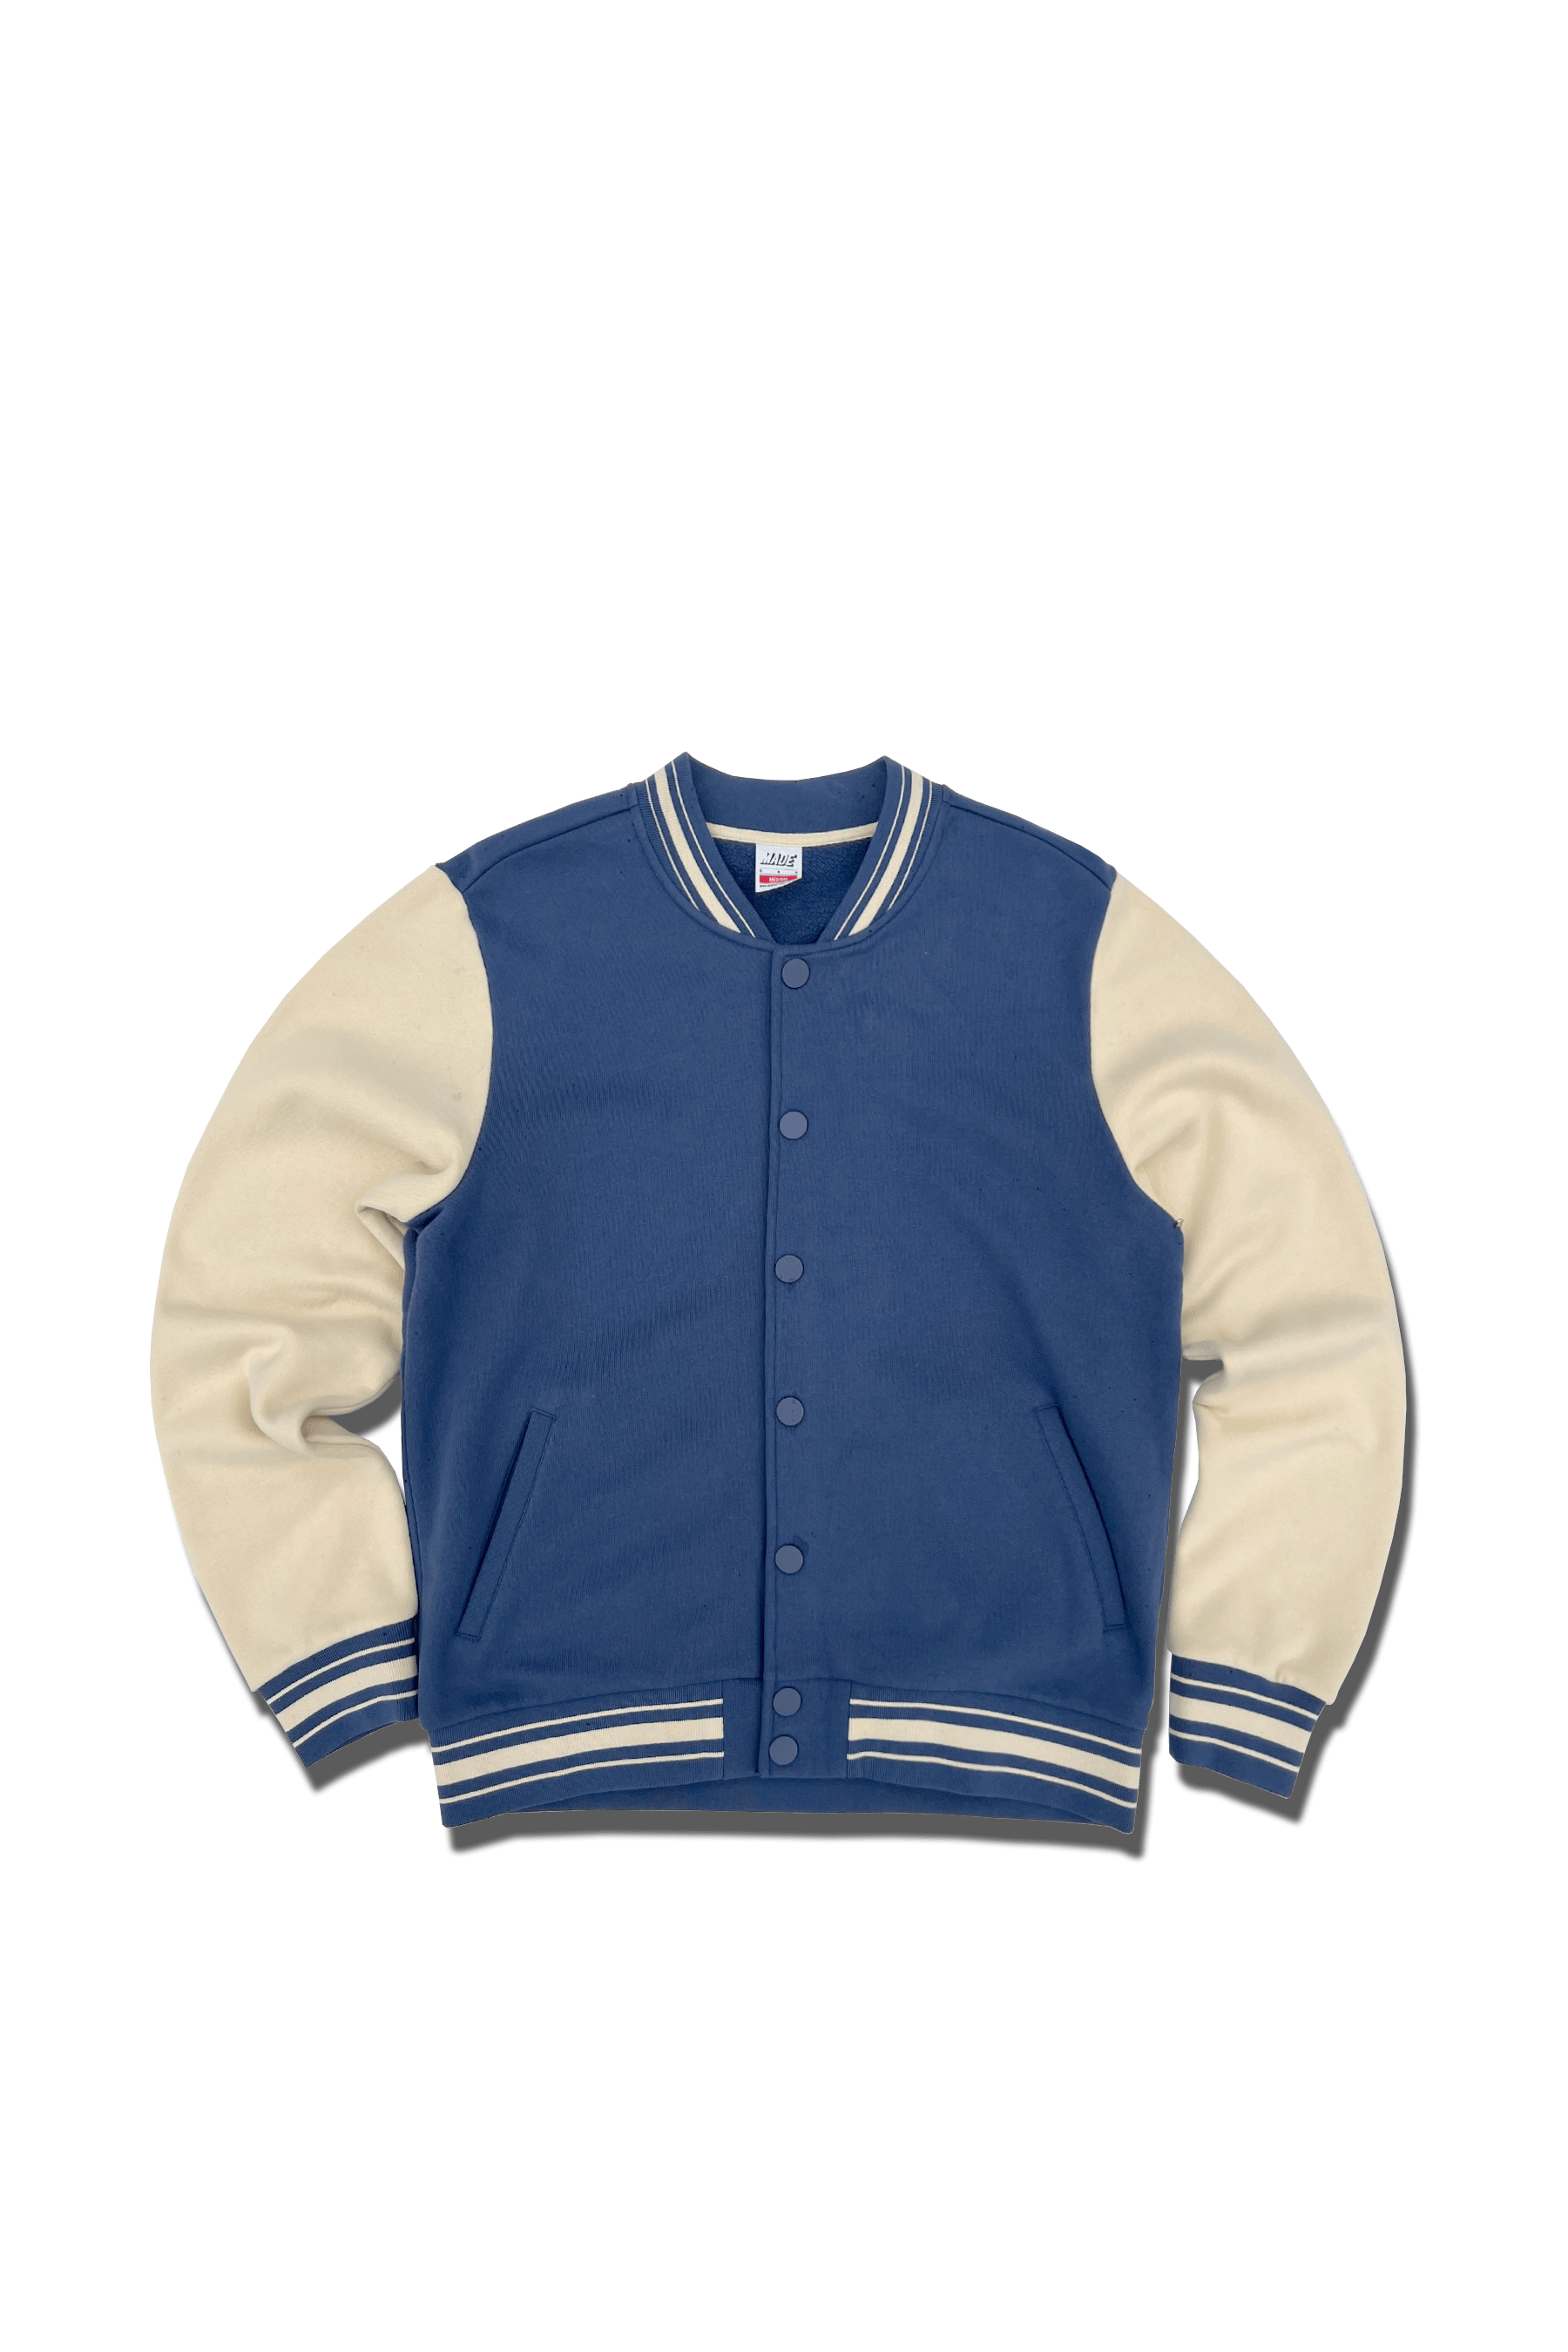 Jacket Makers Letterman Jacket